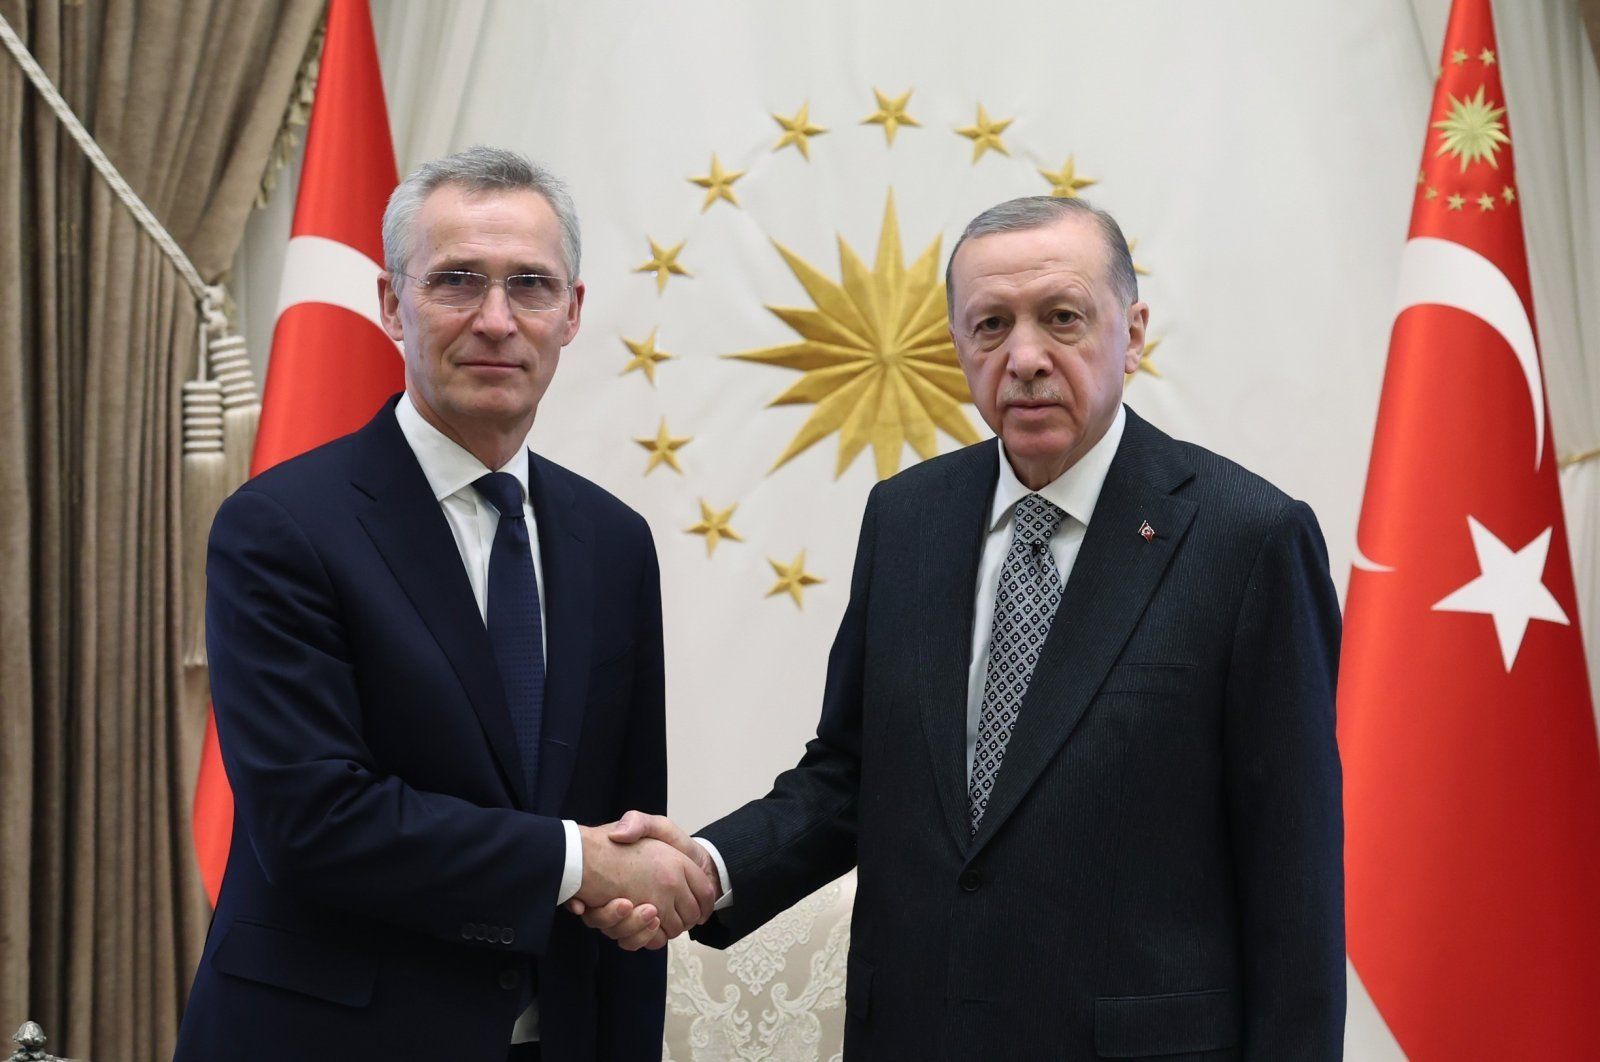 NATO chief to Turkiye’s Erdogan: Sweden ‘has fulfilled obligations’ for membership